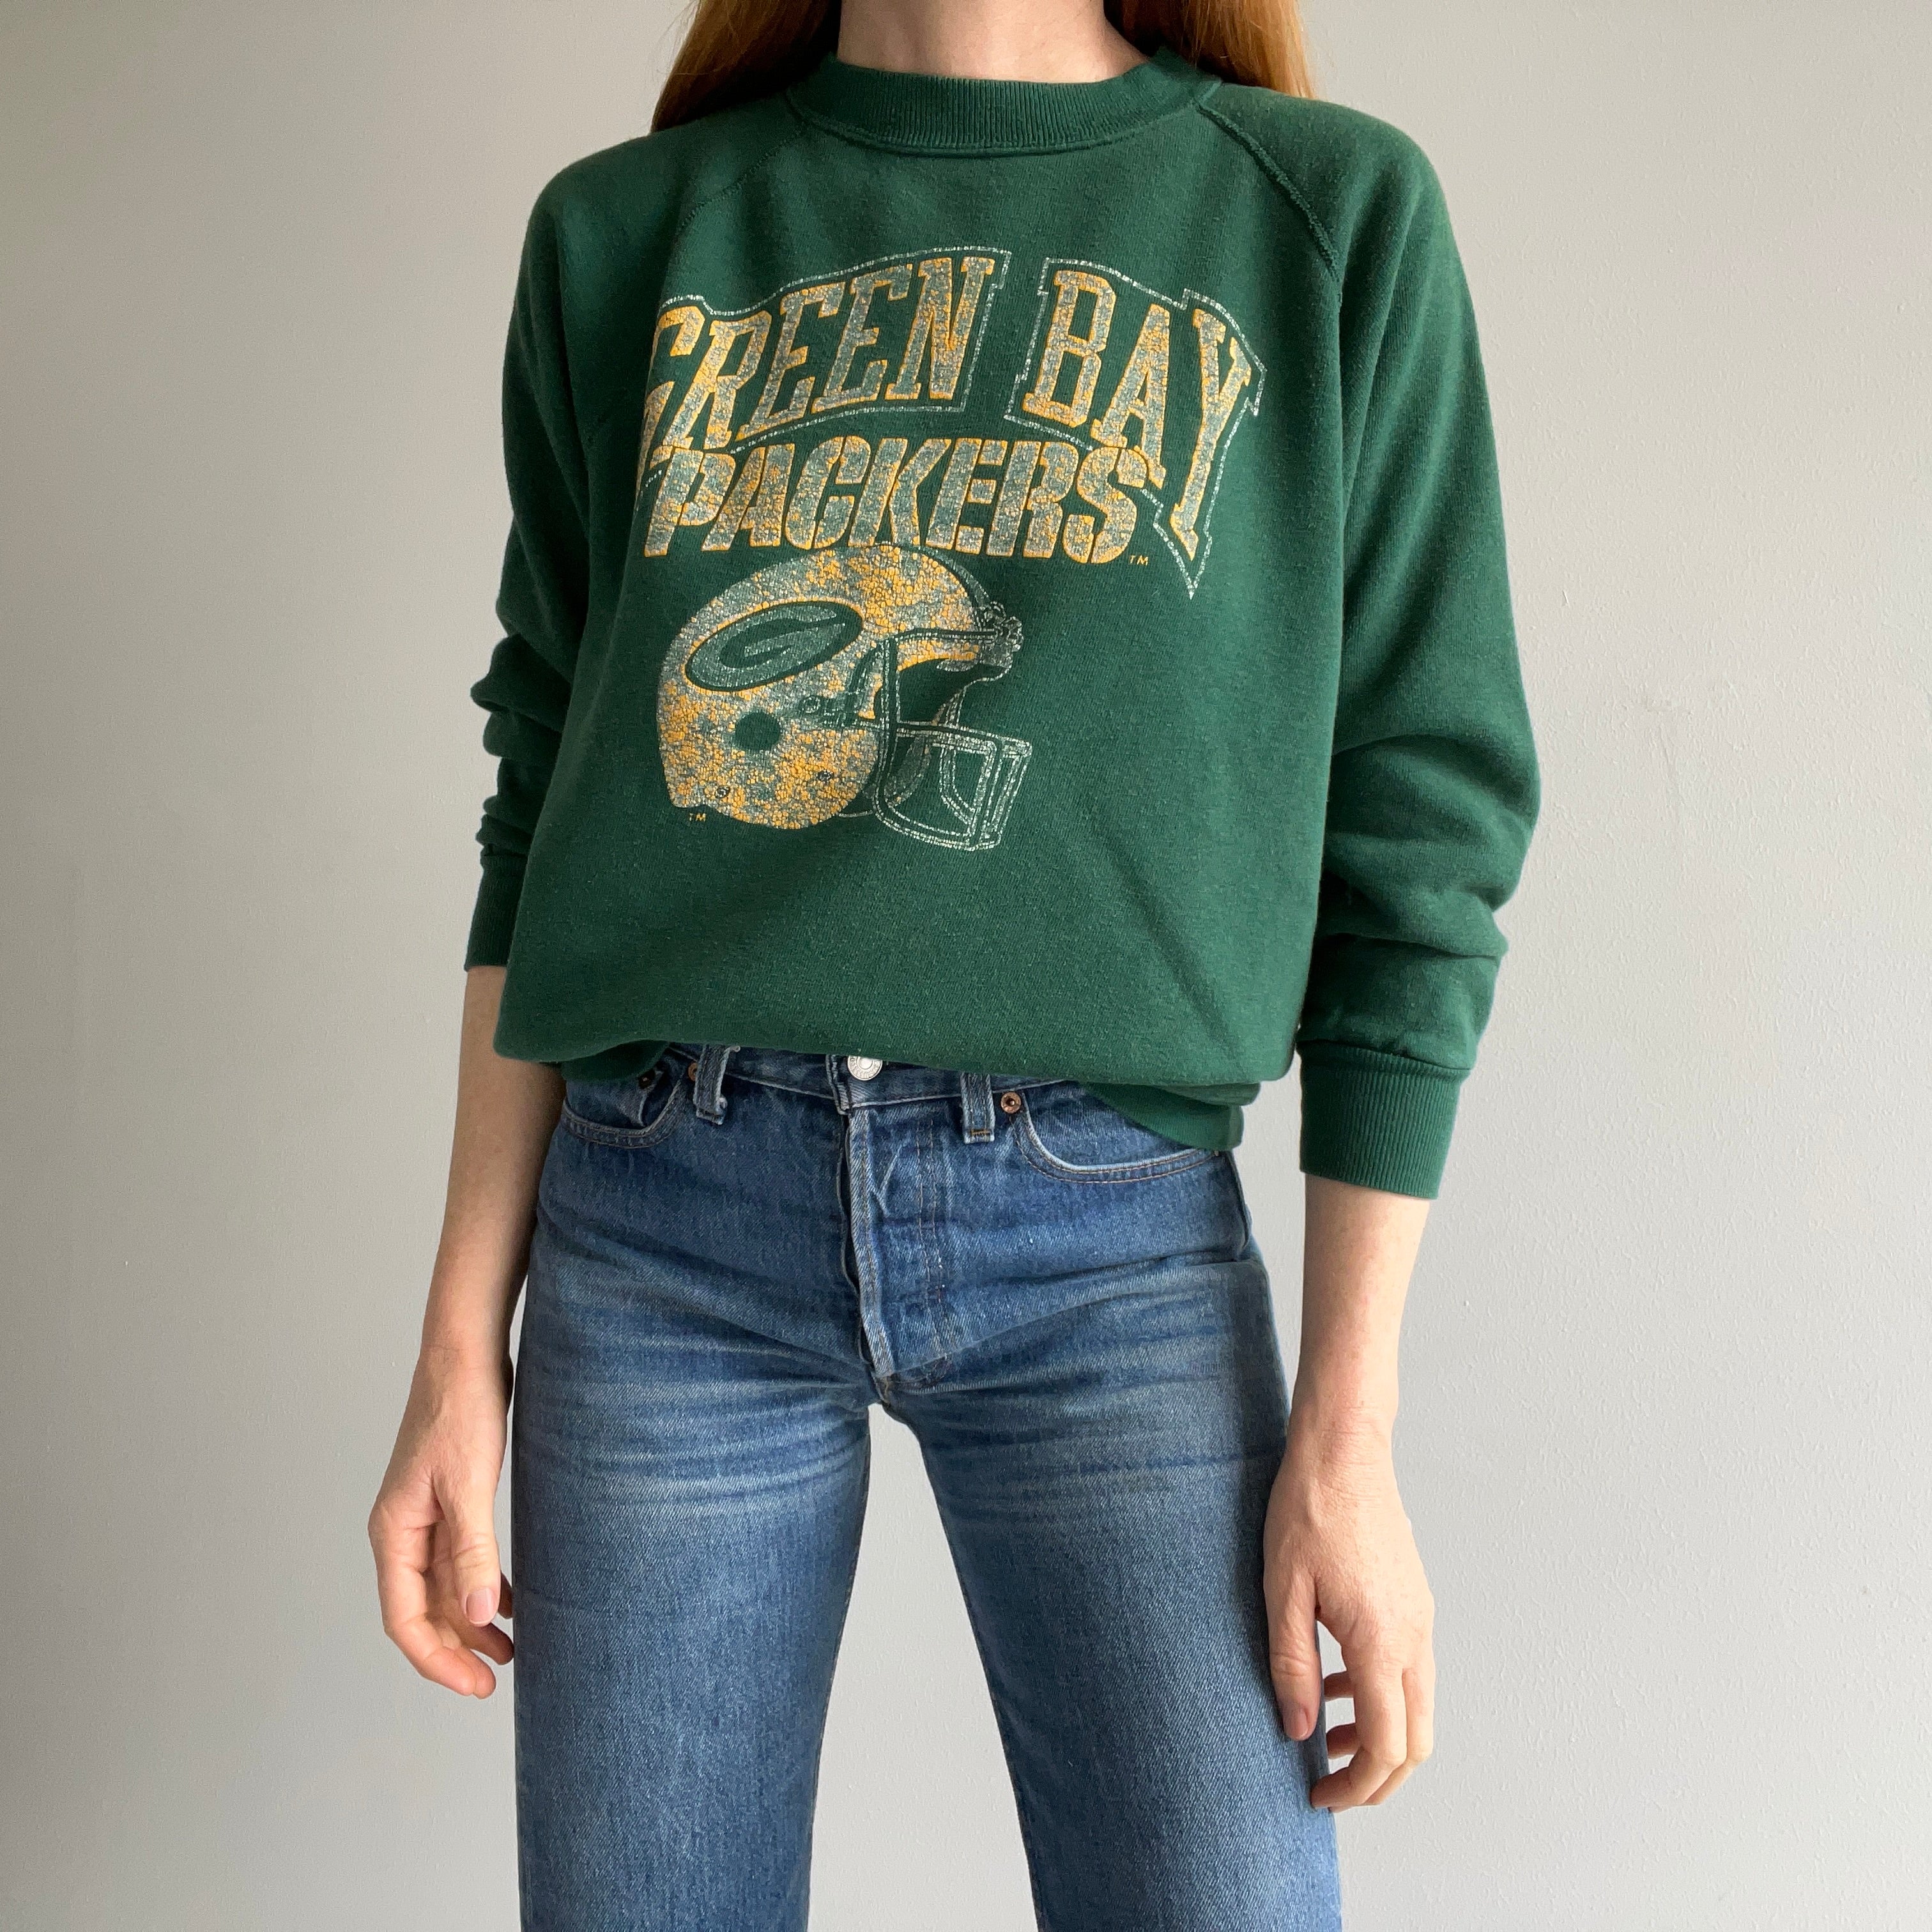 1970/80s Champion Blue Bar Green Bay Packers Sweatshirt